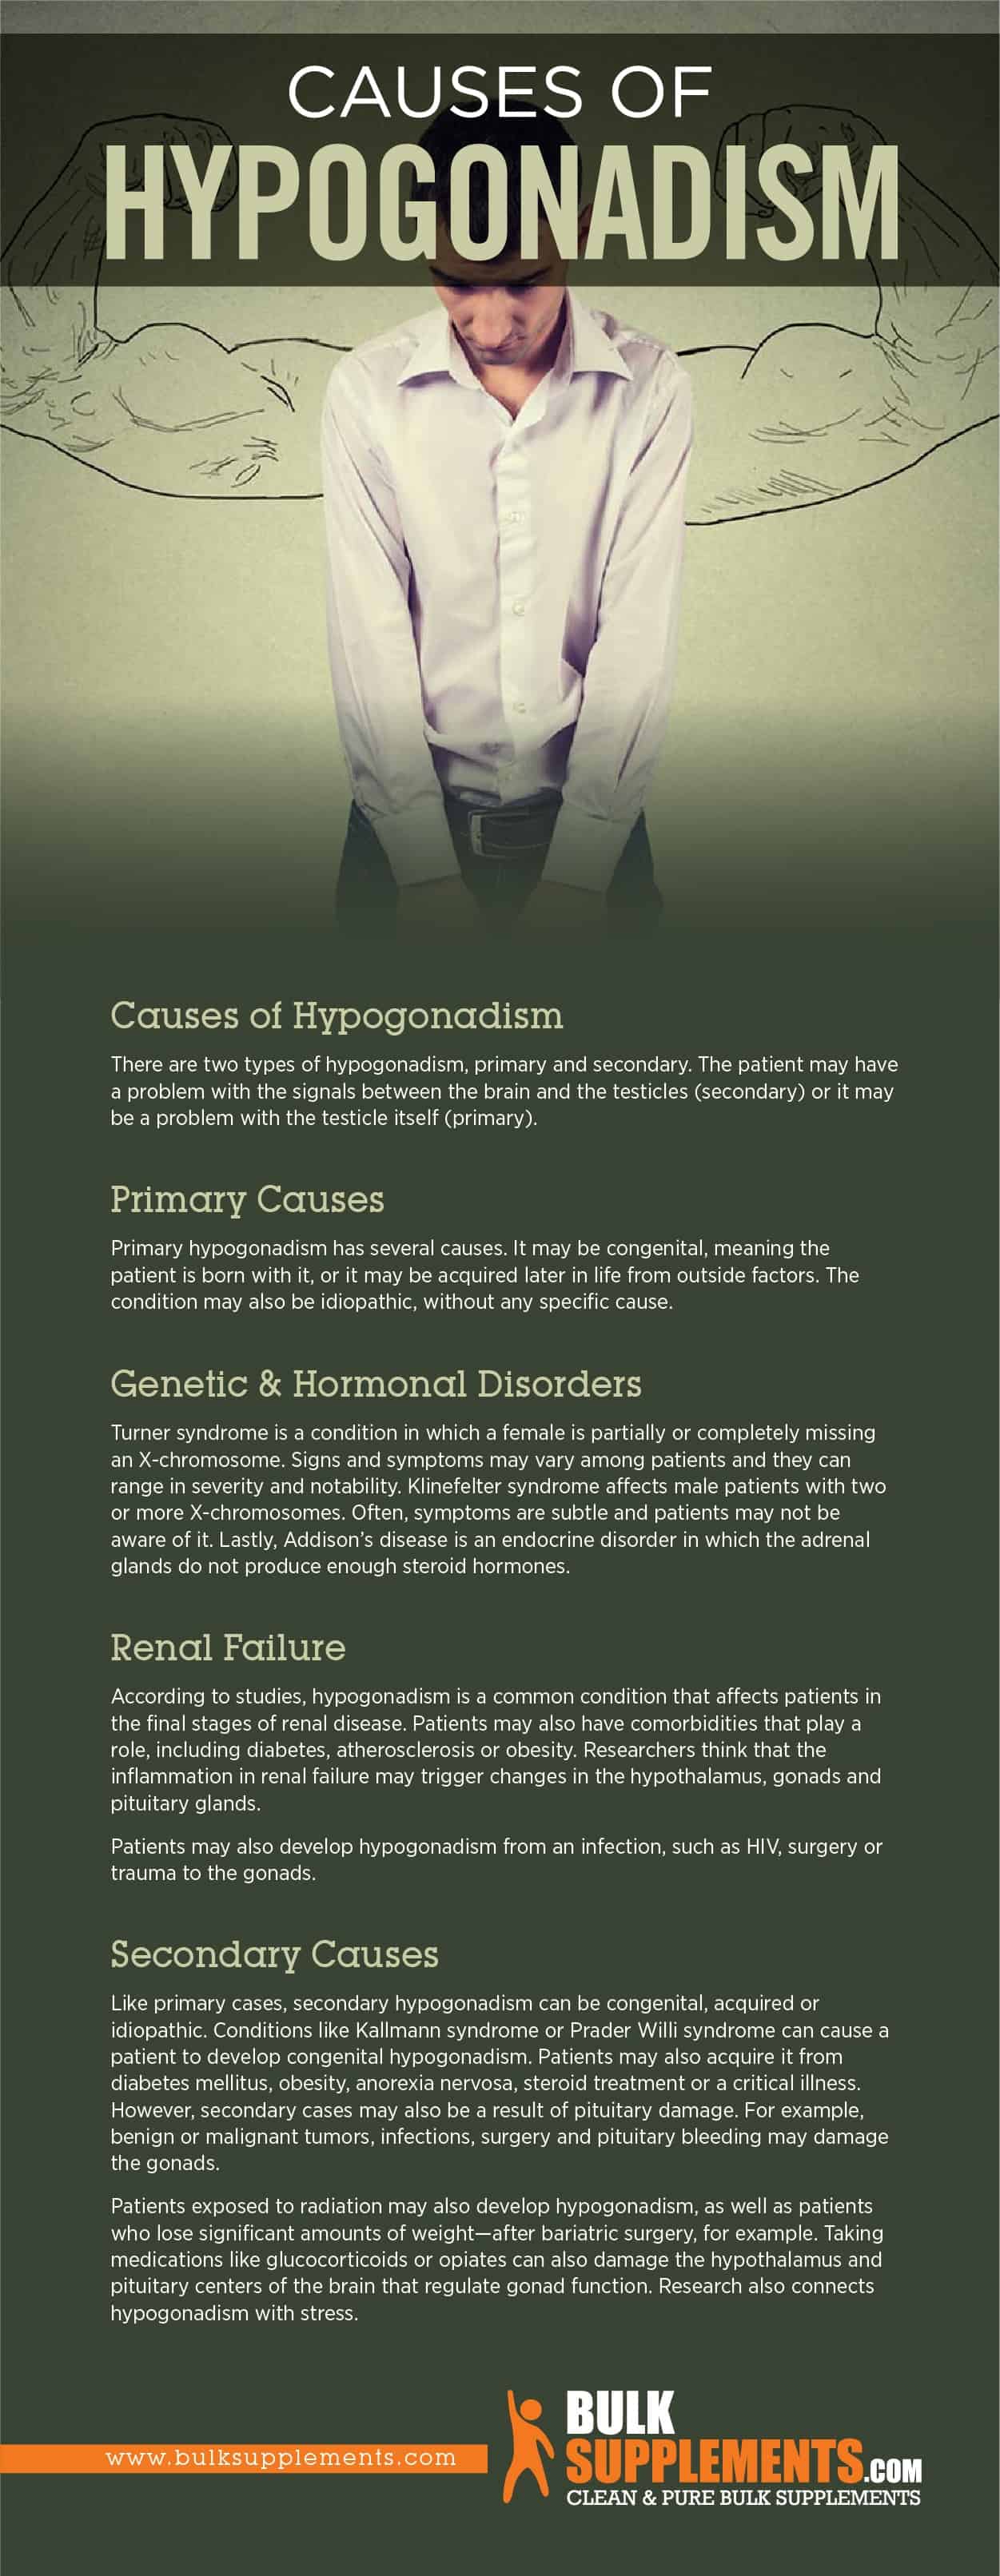 Causes of Hypogonadism